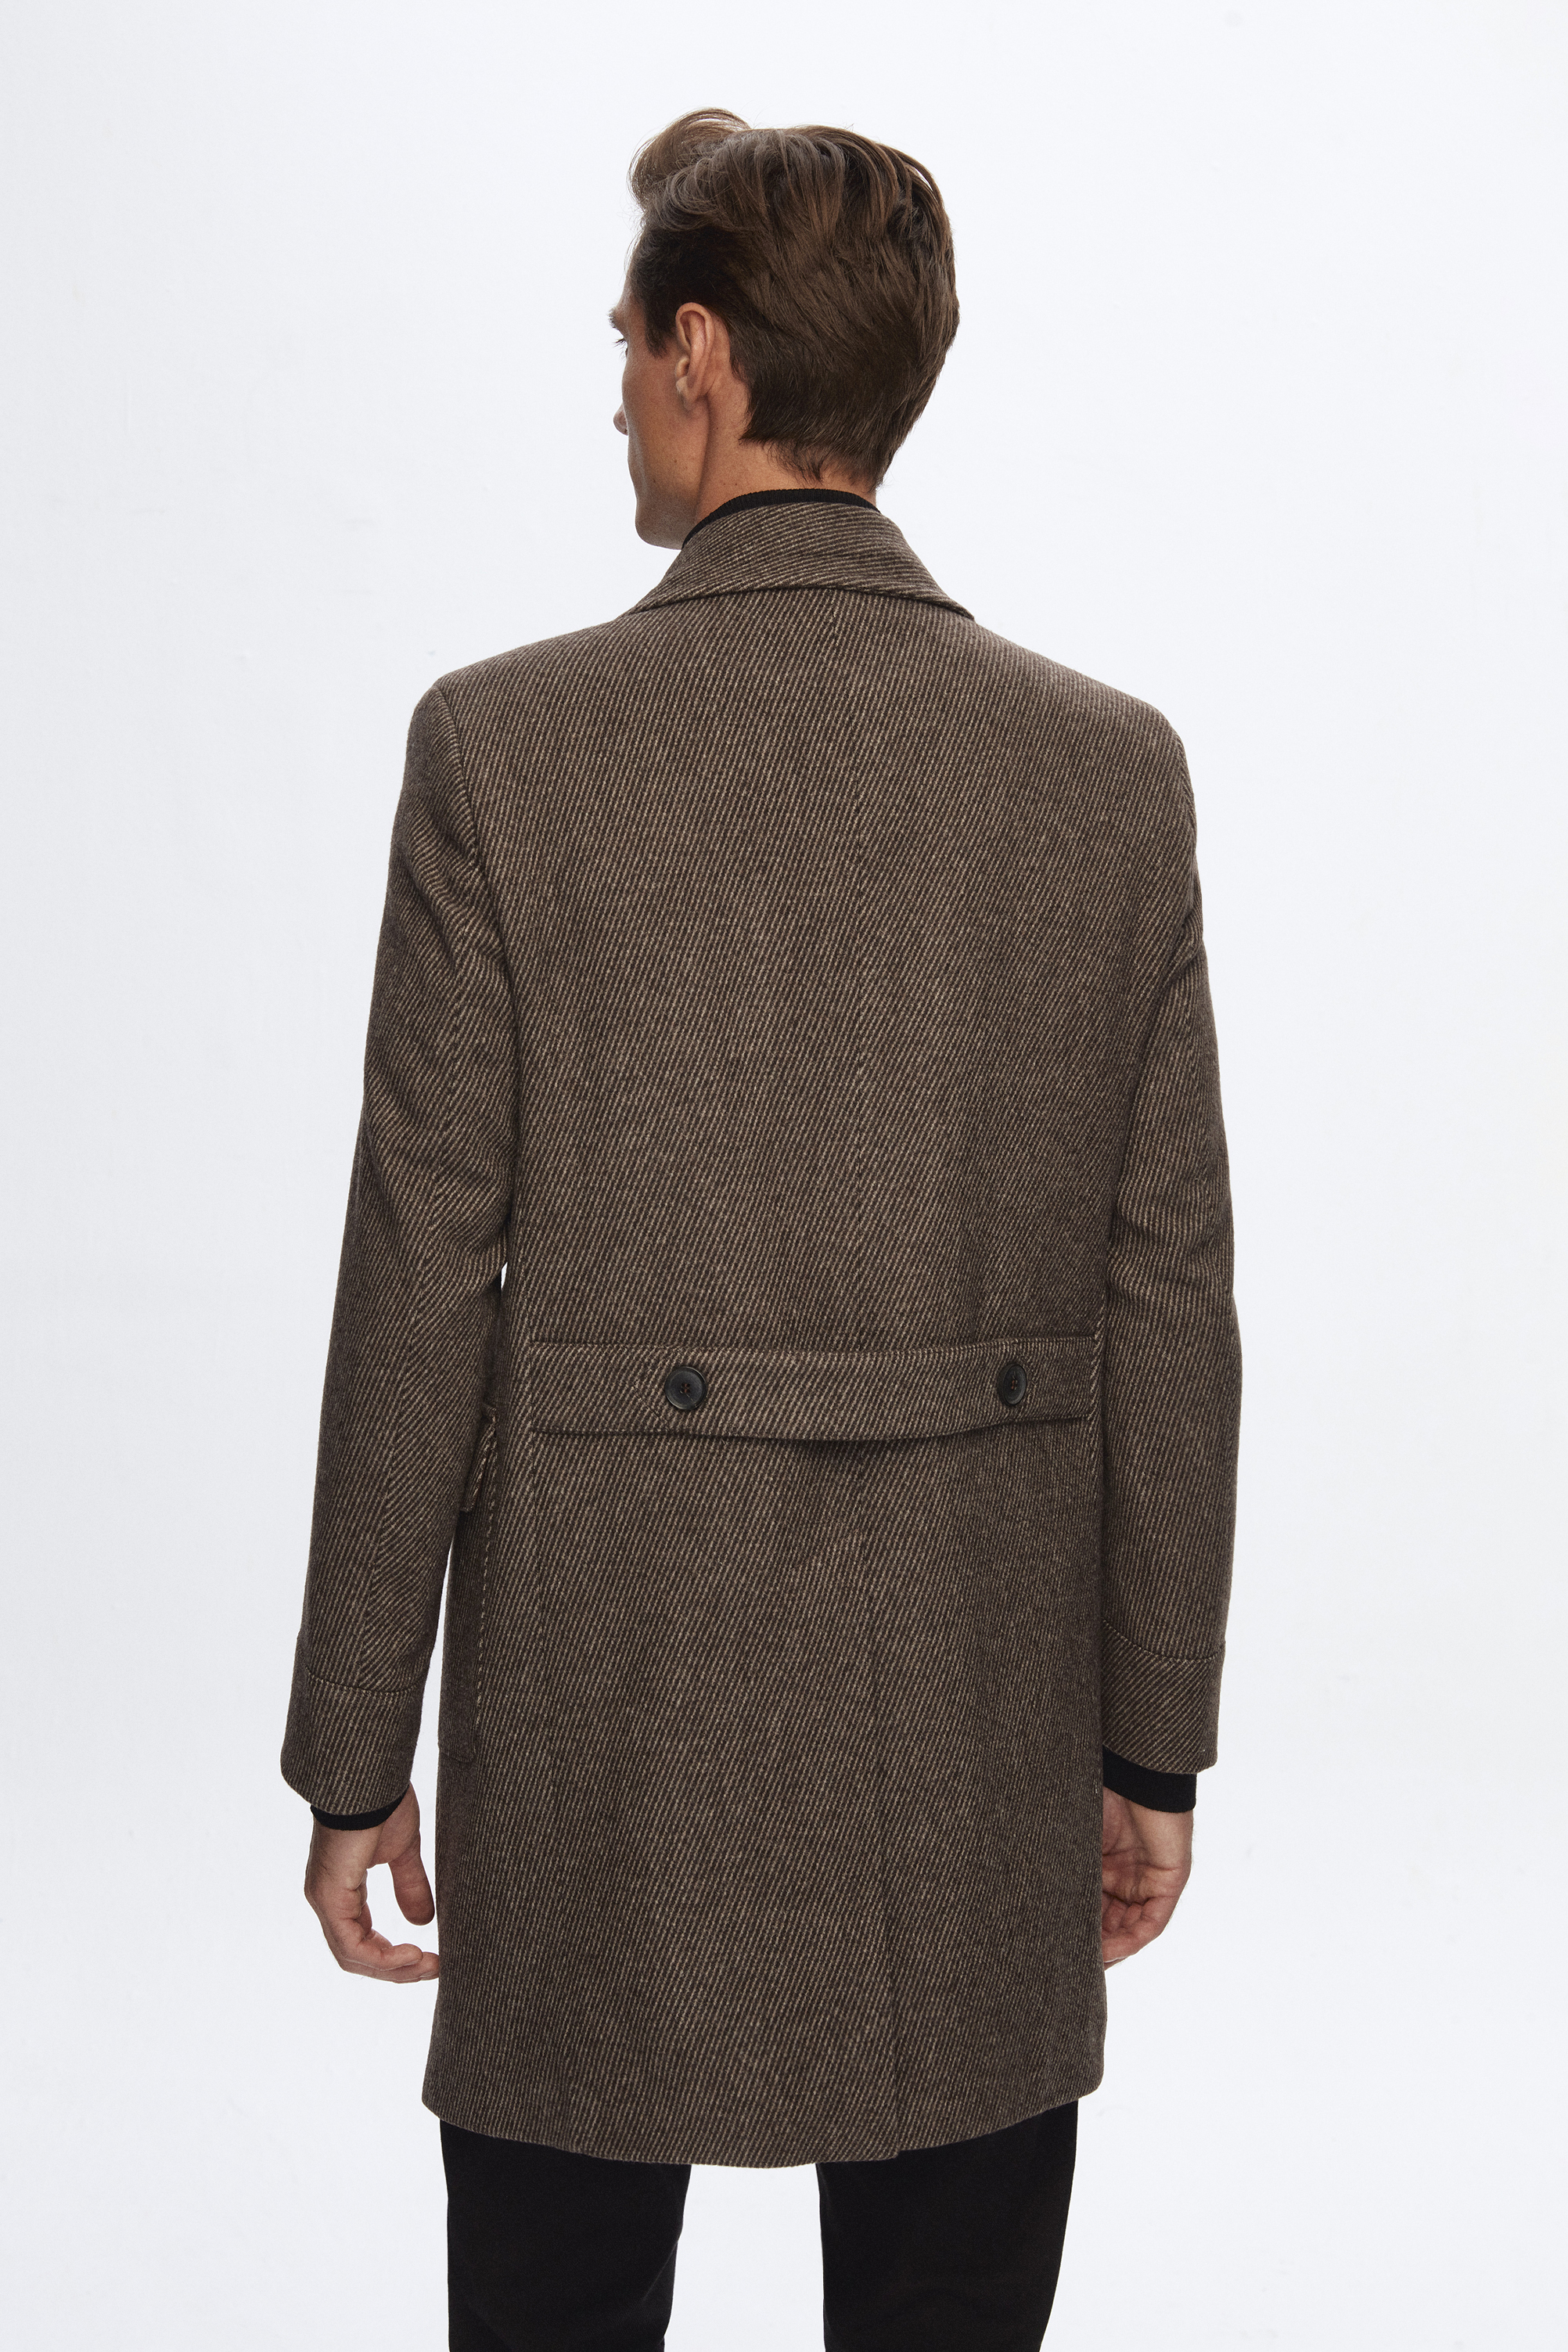 Damat Tween Damat Regular Fit Kahverengi Kruvaze Palto. 5